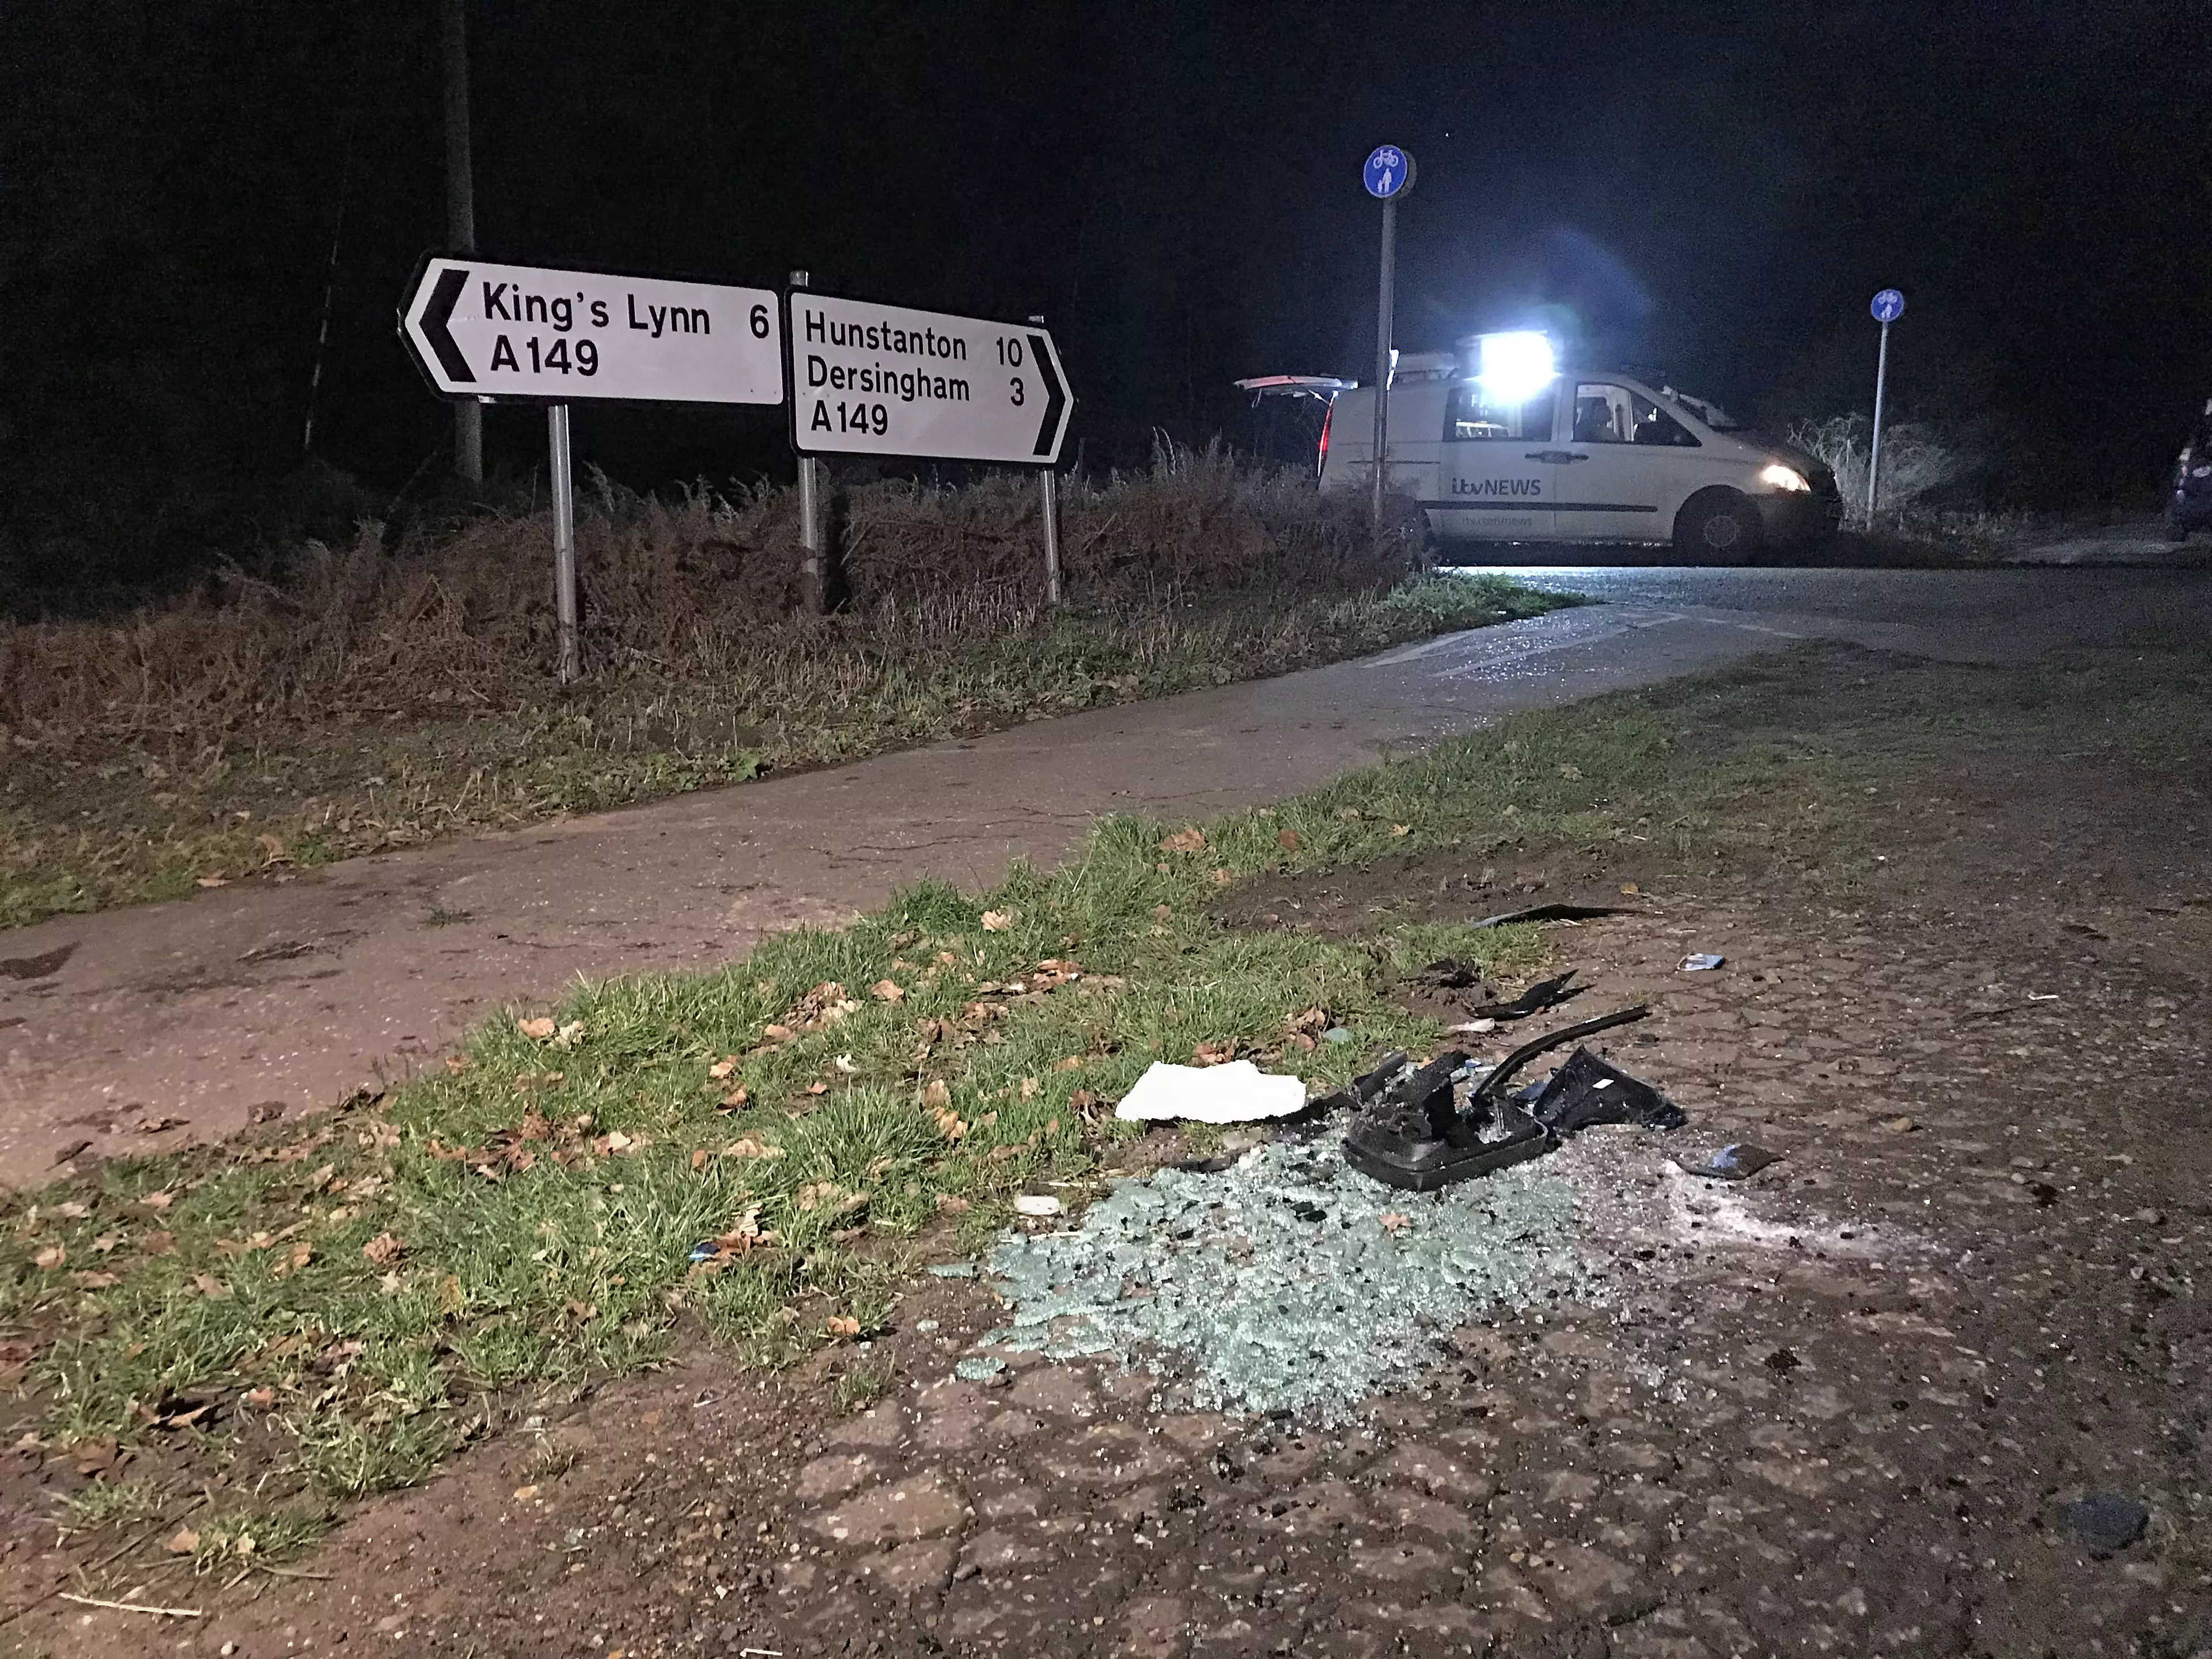 Debris on the road following Prince Philip's recent crash.